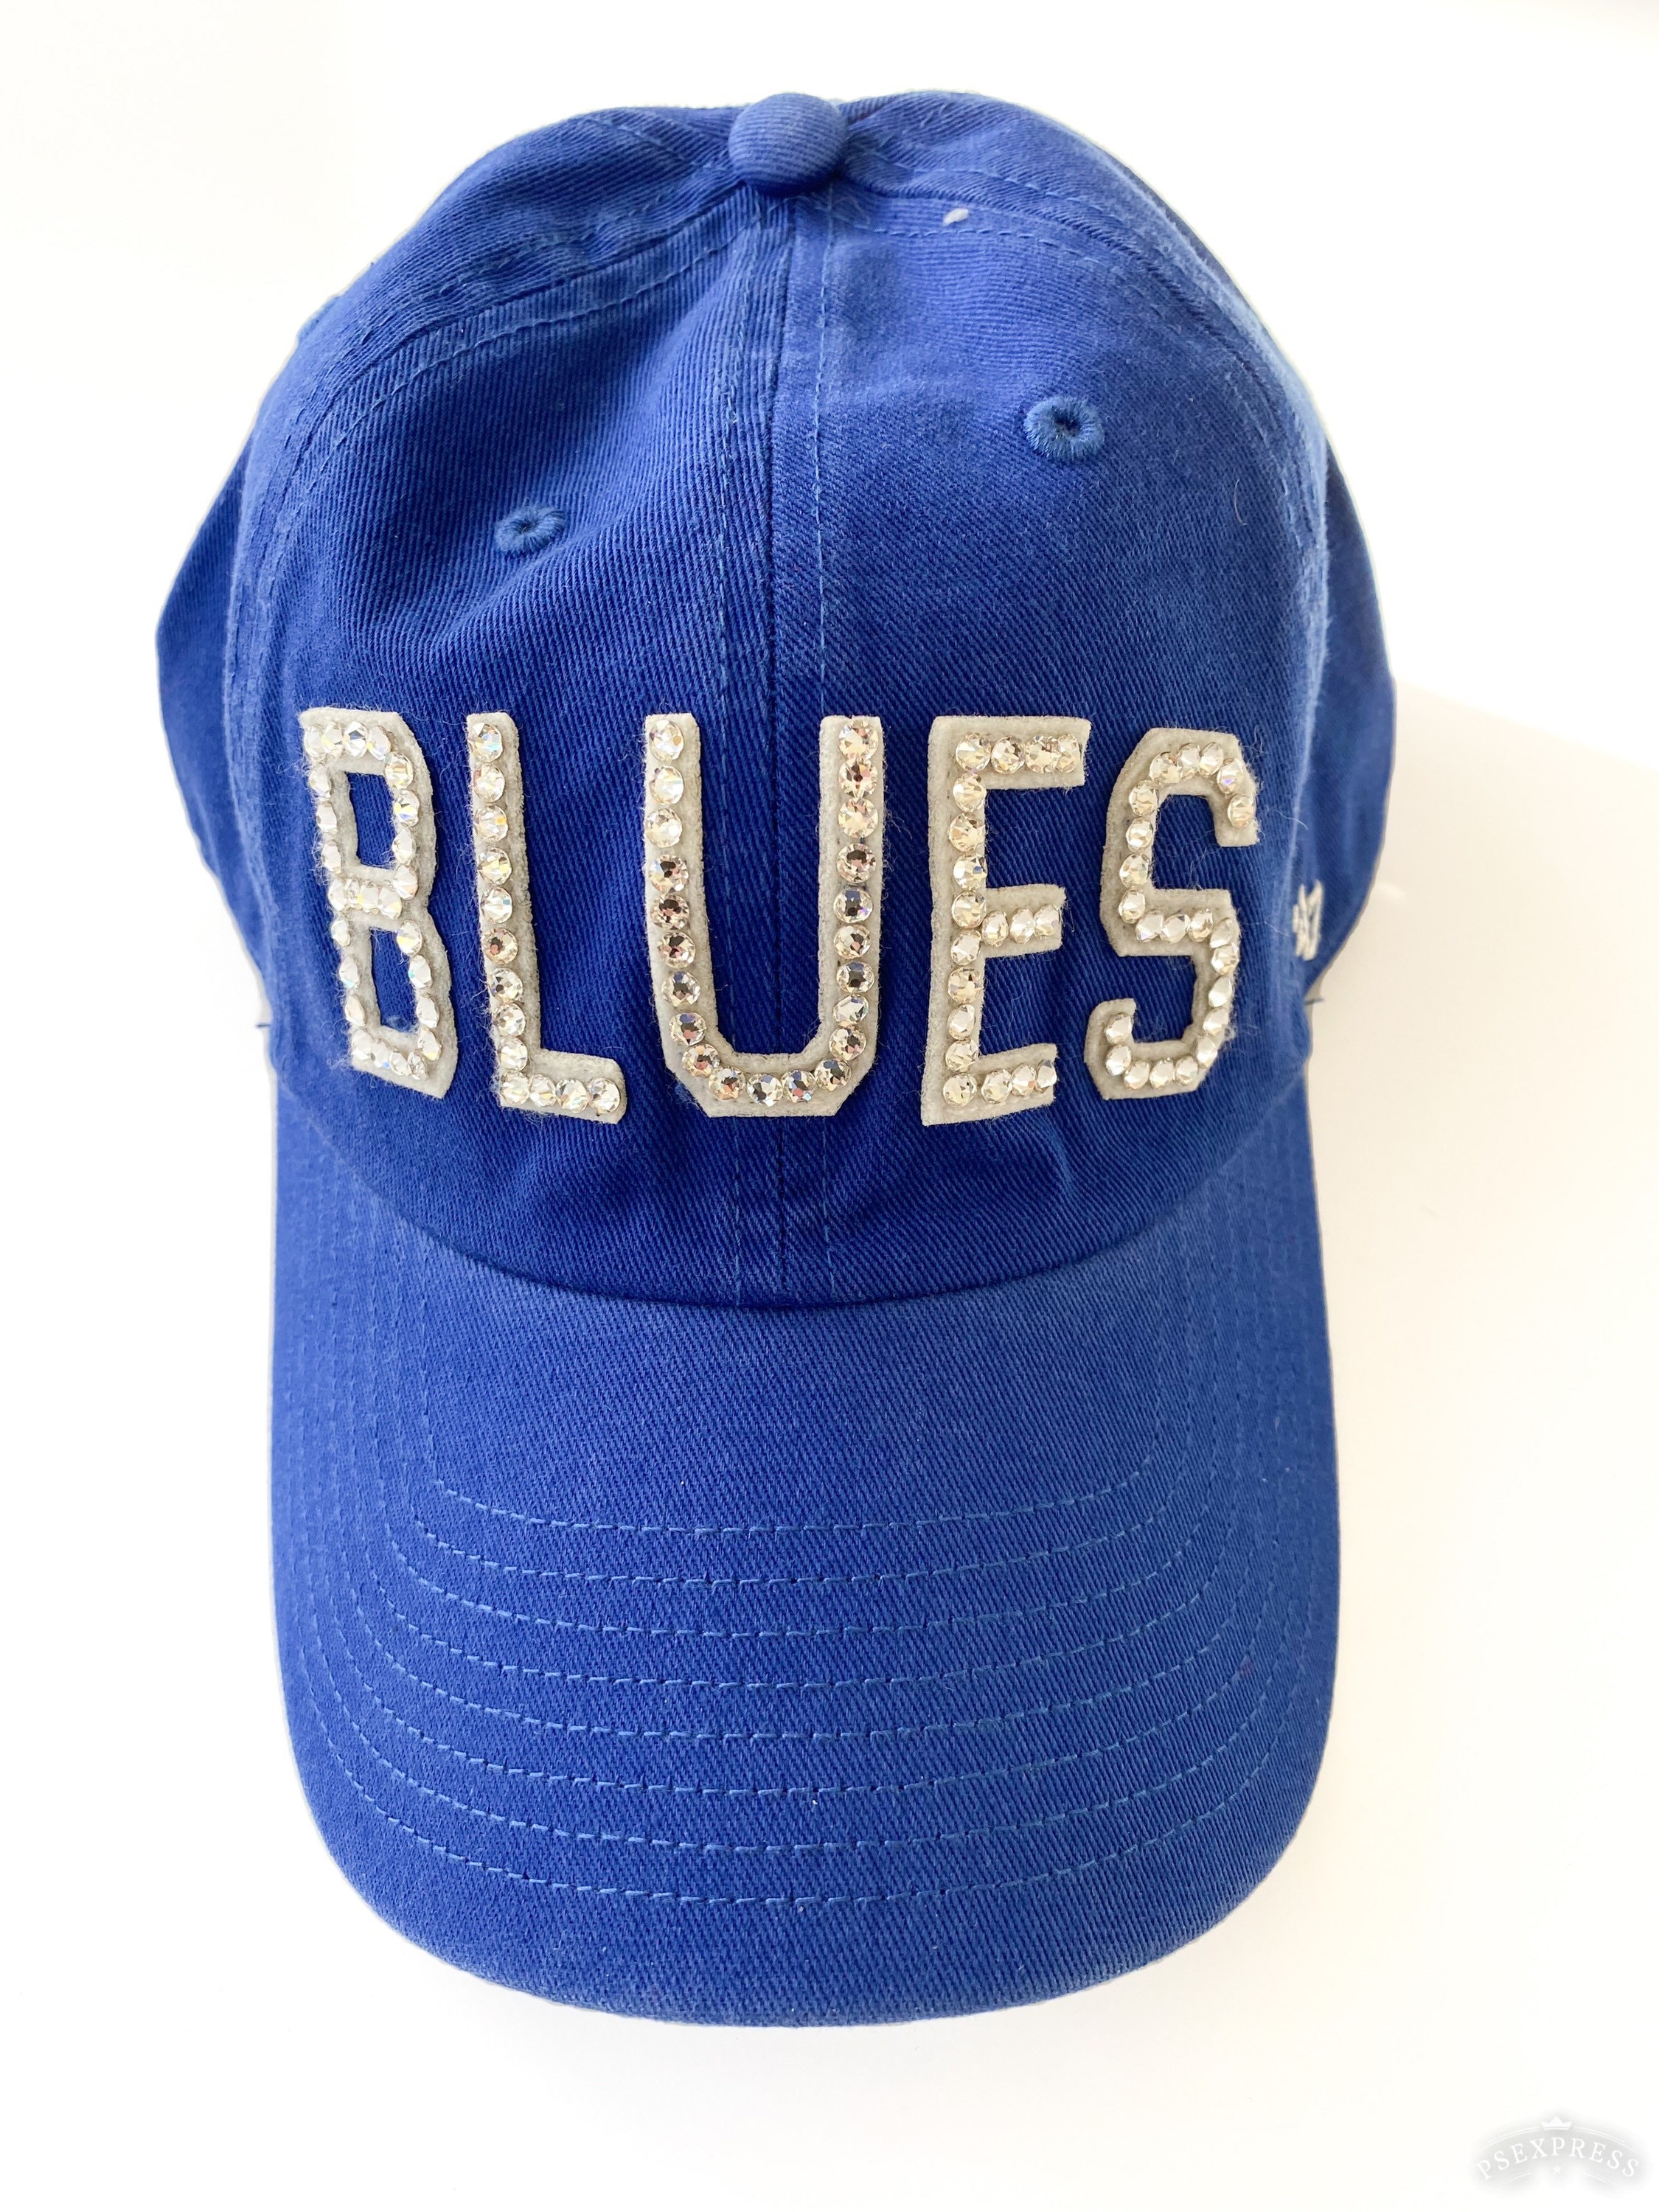 CLEAR PLASTIC 10' X 10 X 5 ST LOUIS BLUES BAG — Hats N Stuff